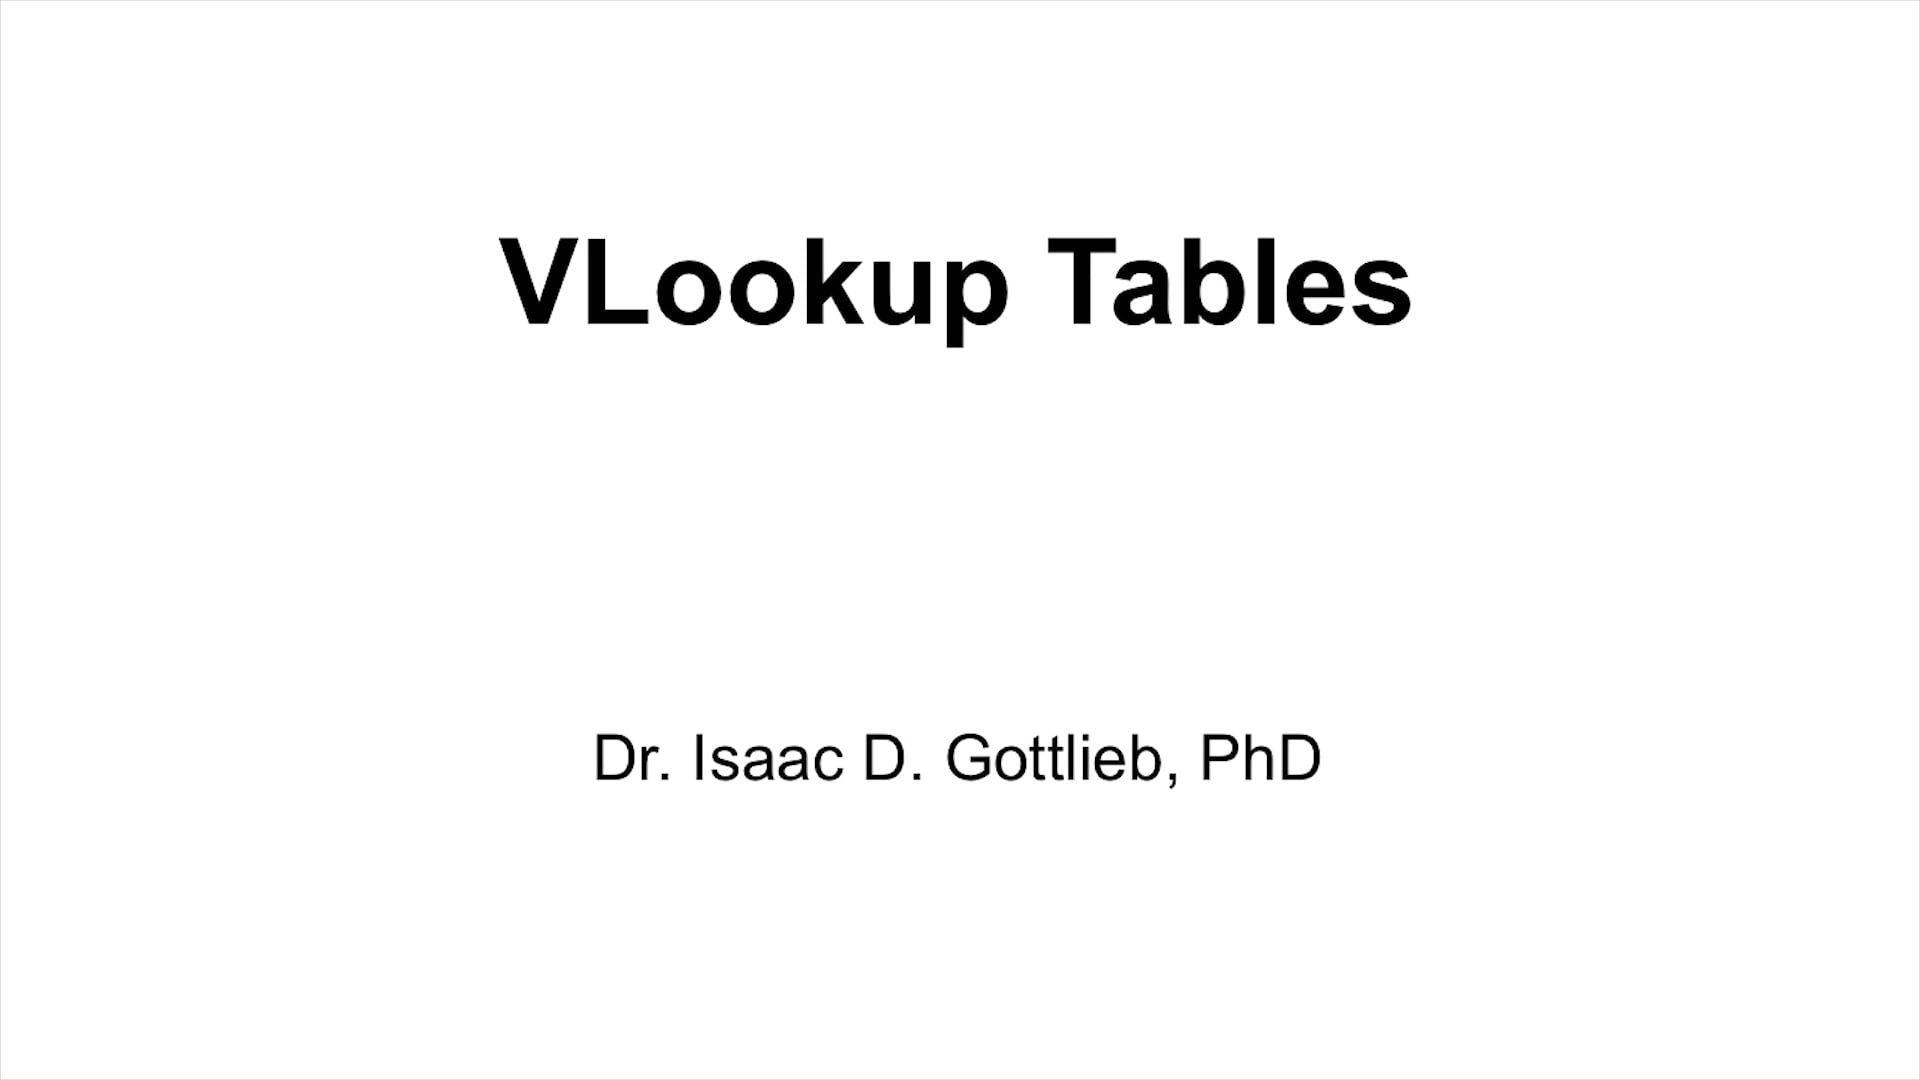 VLookup Tables